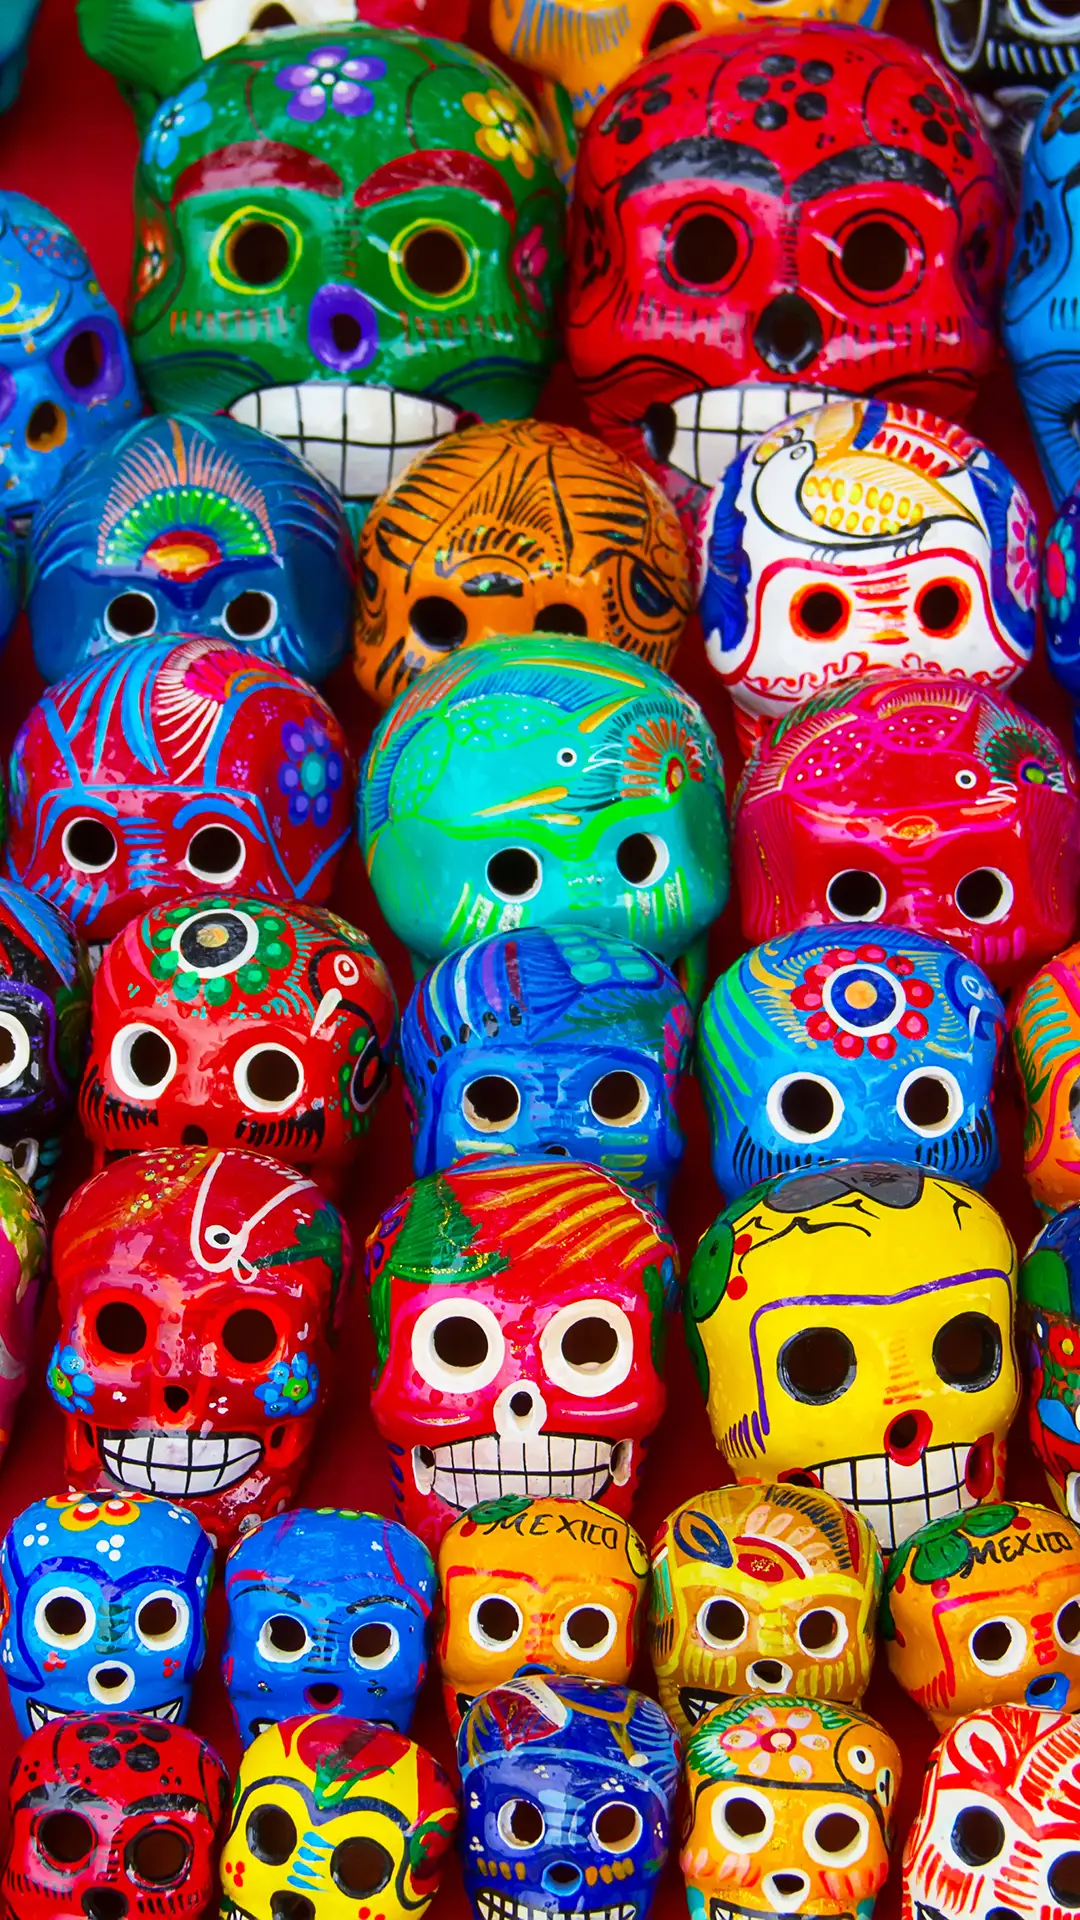 Mexican ceramics in different bright colours.